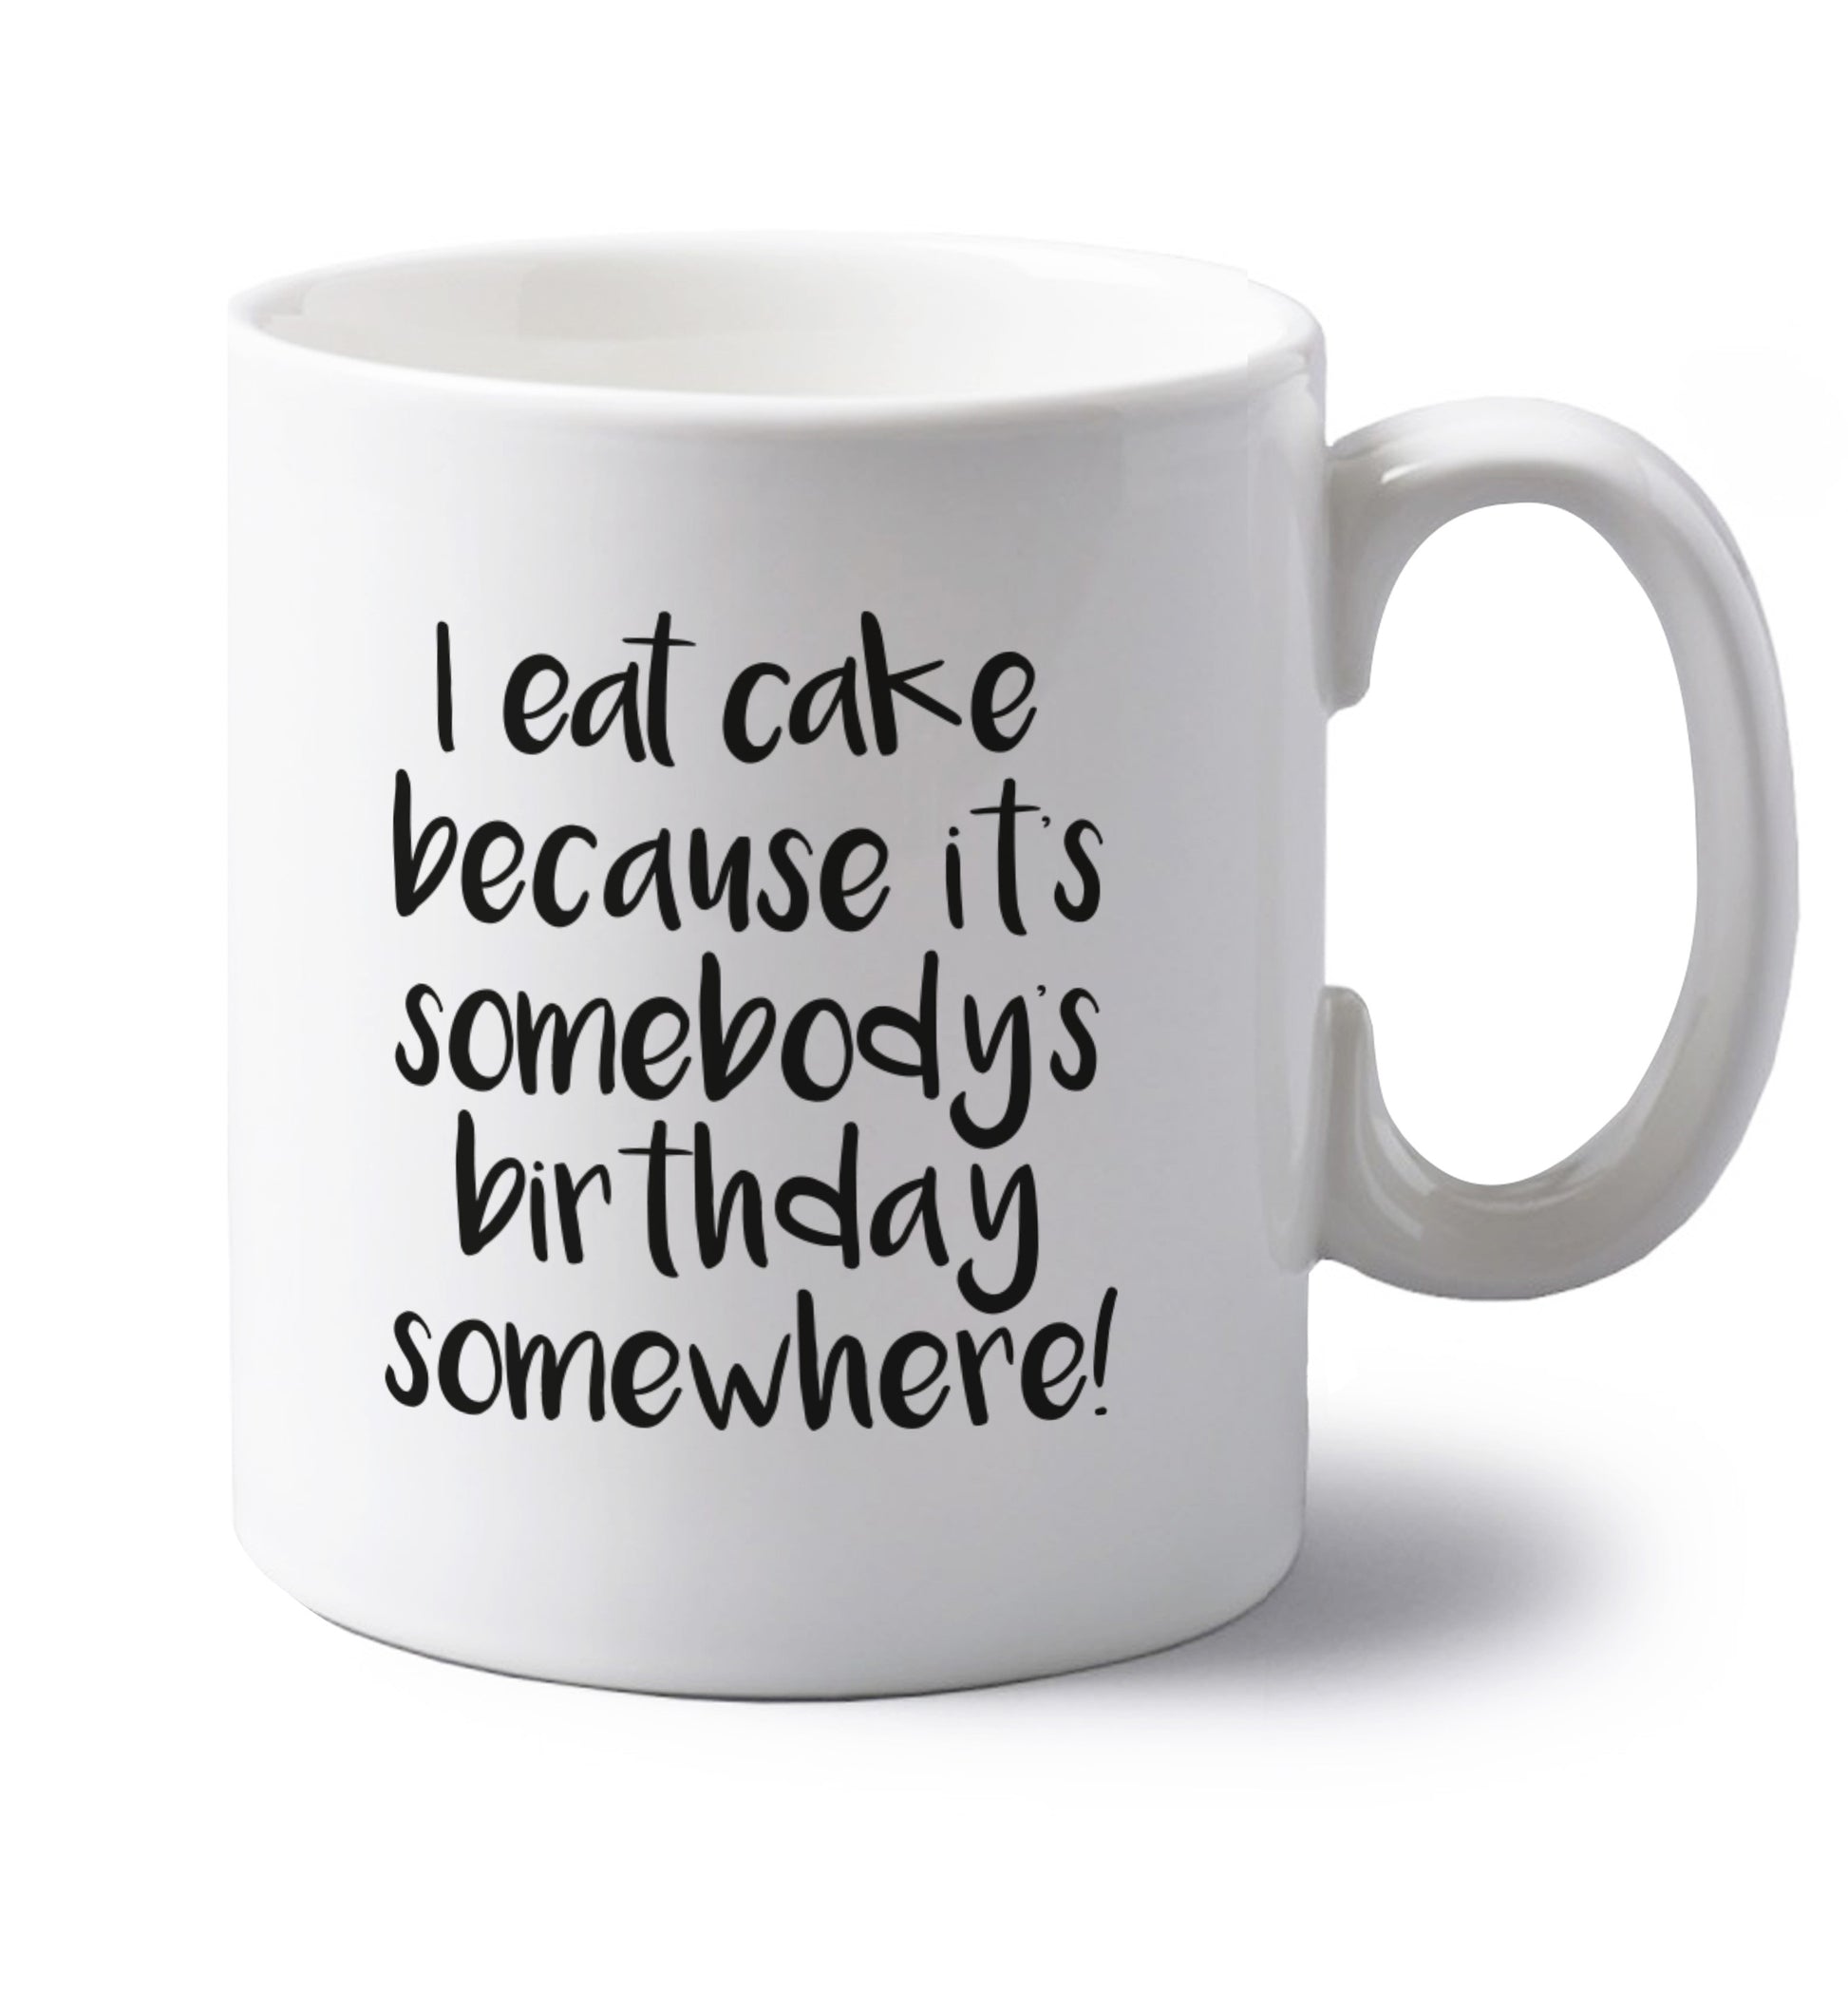 I eat cake because it's somebody's birthday somewhere! left handed white ceramic mug 